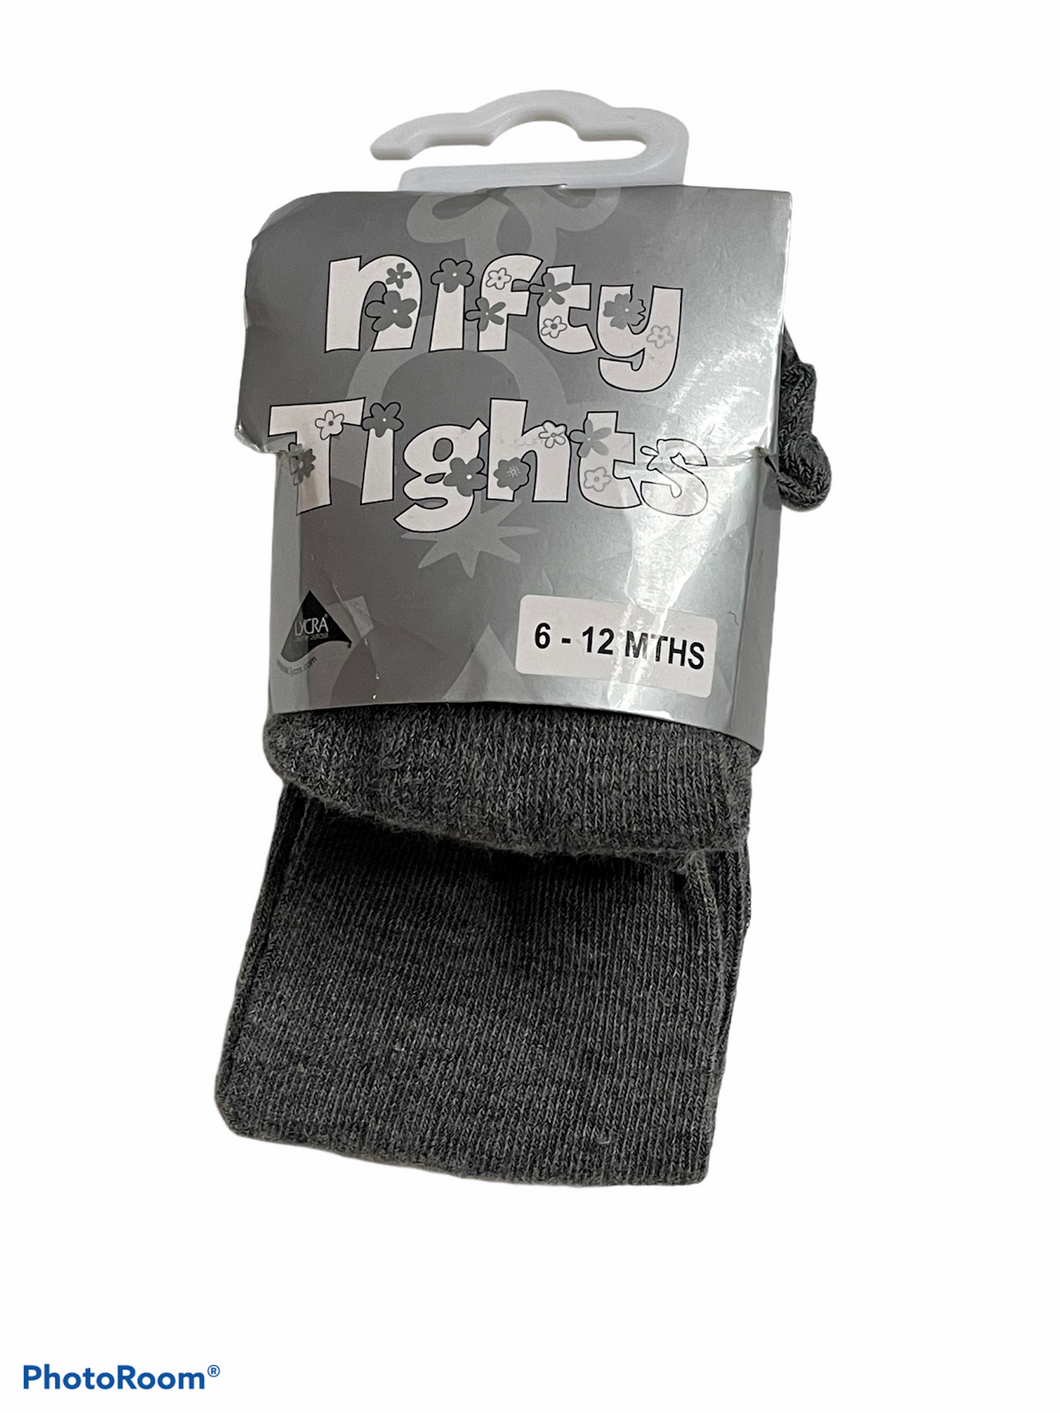 Thick grey tights